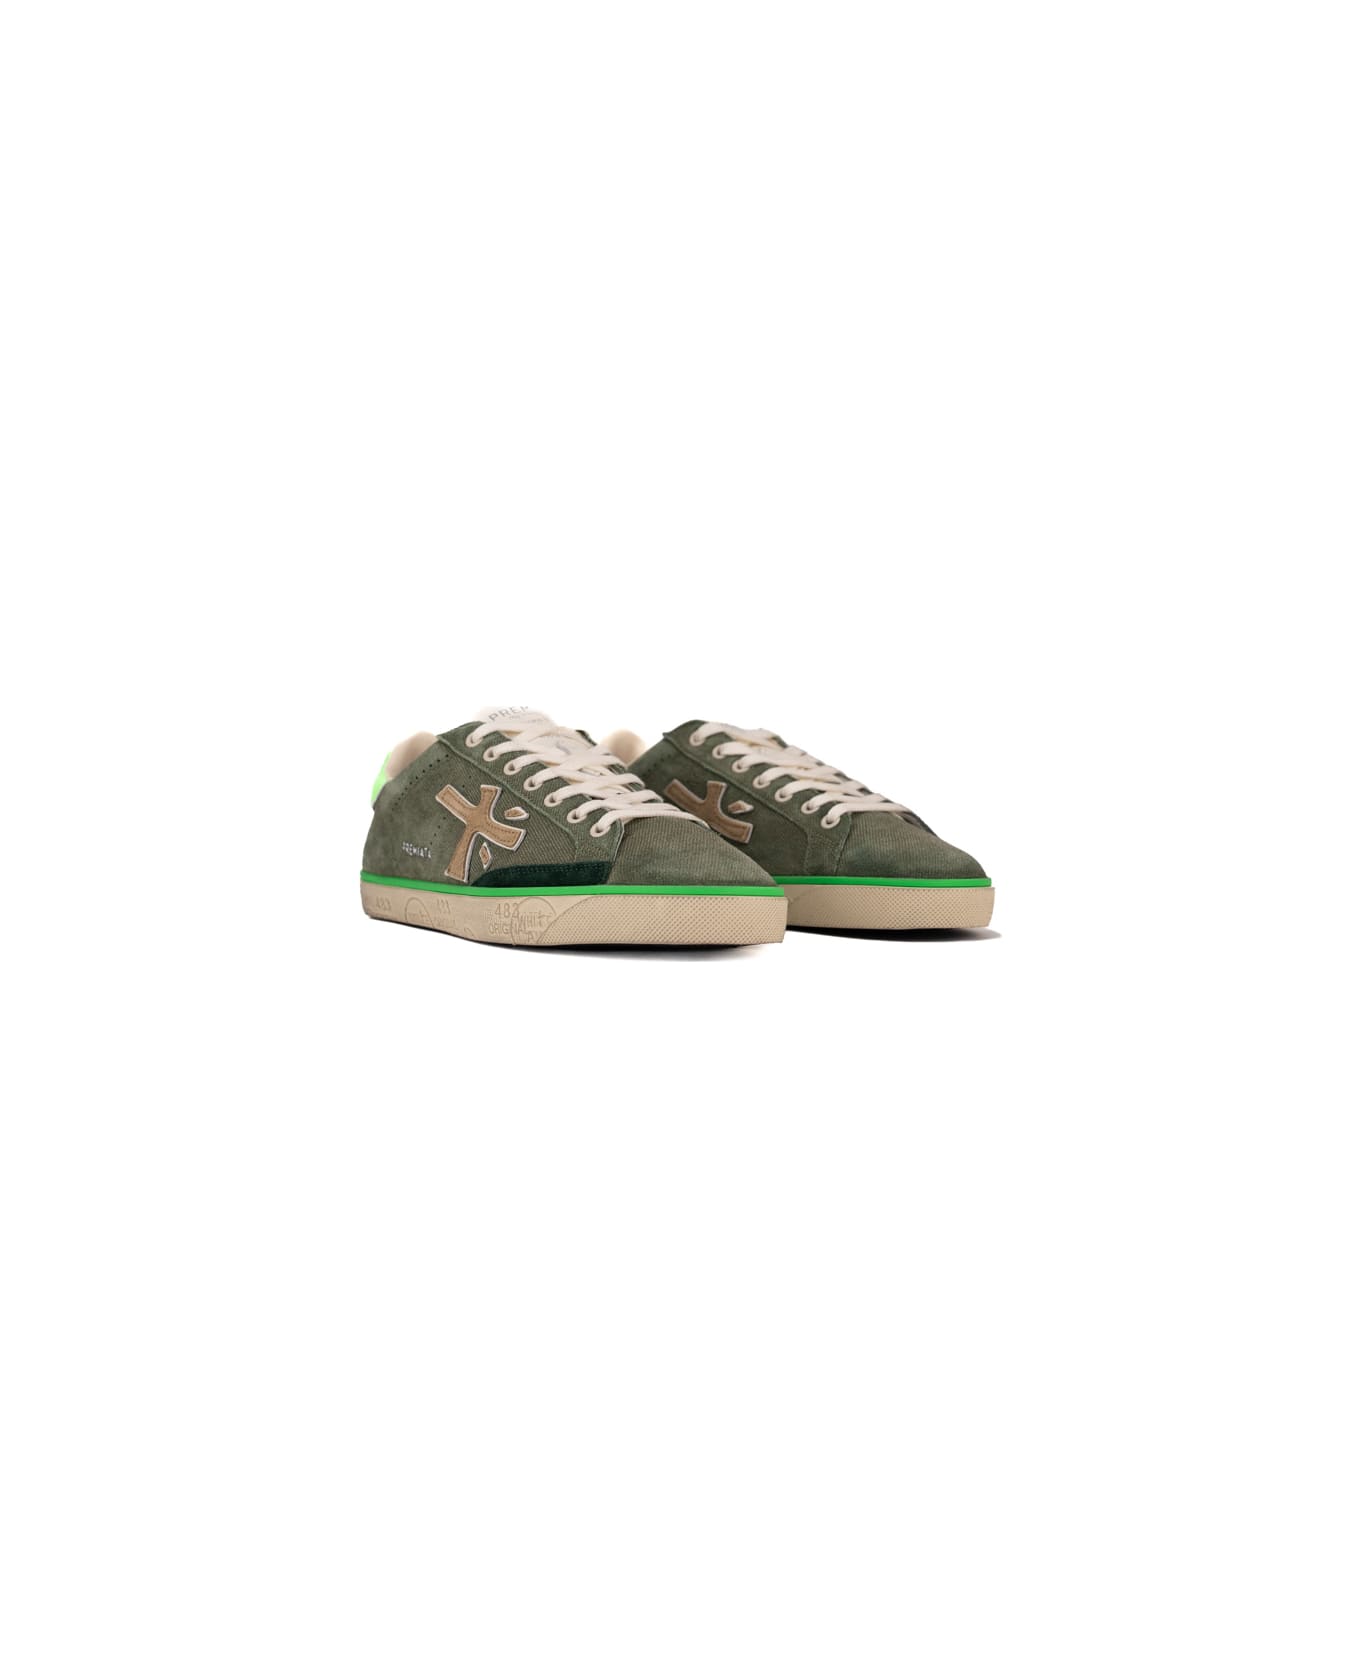 Premiata Steven 6644 Sneakers - Verde スニーカー